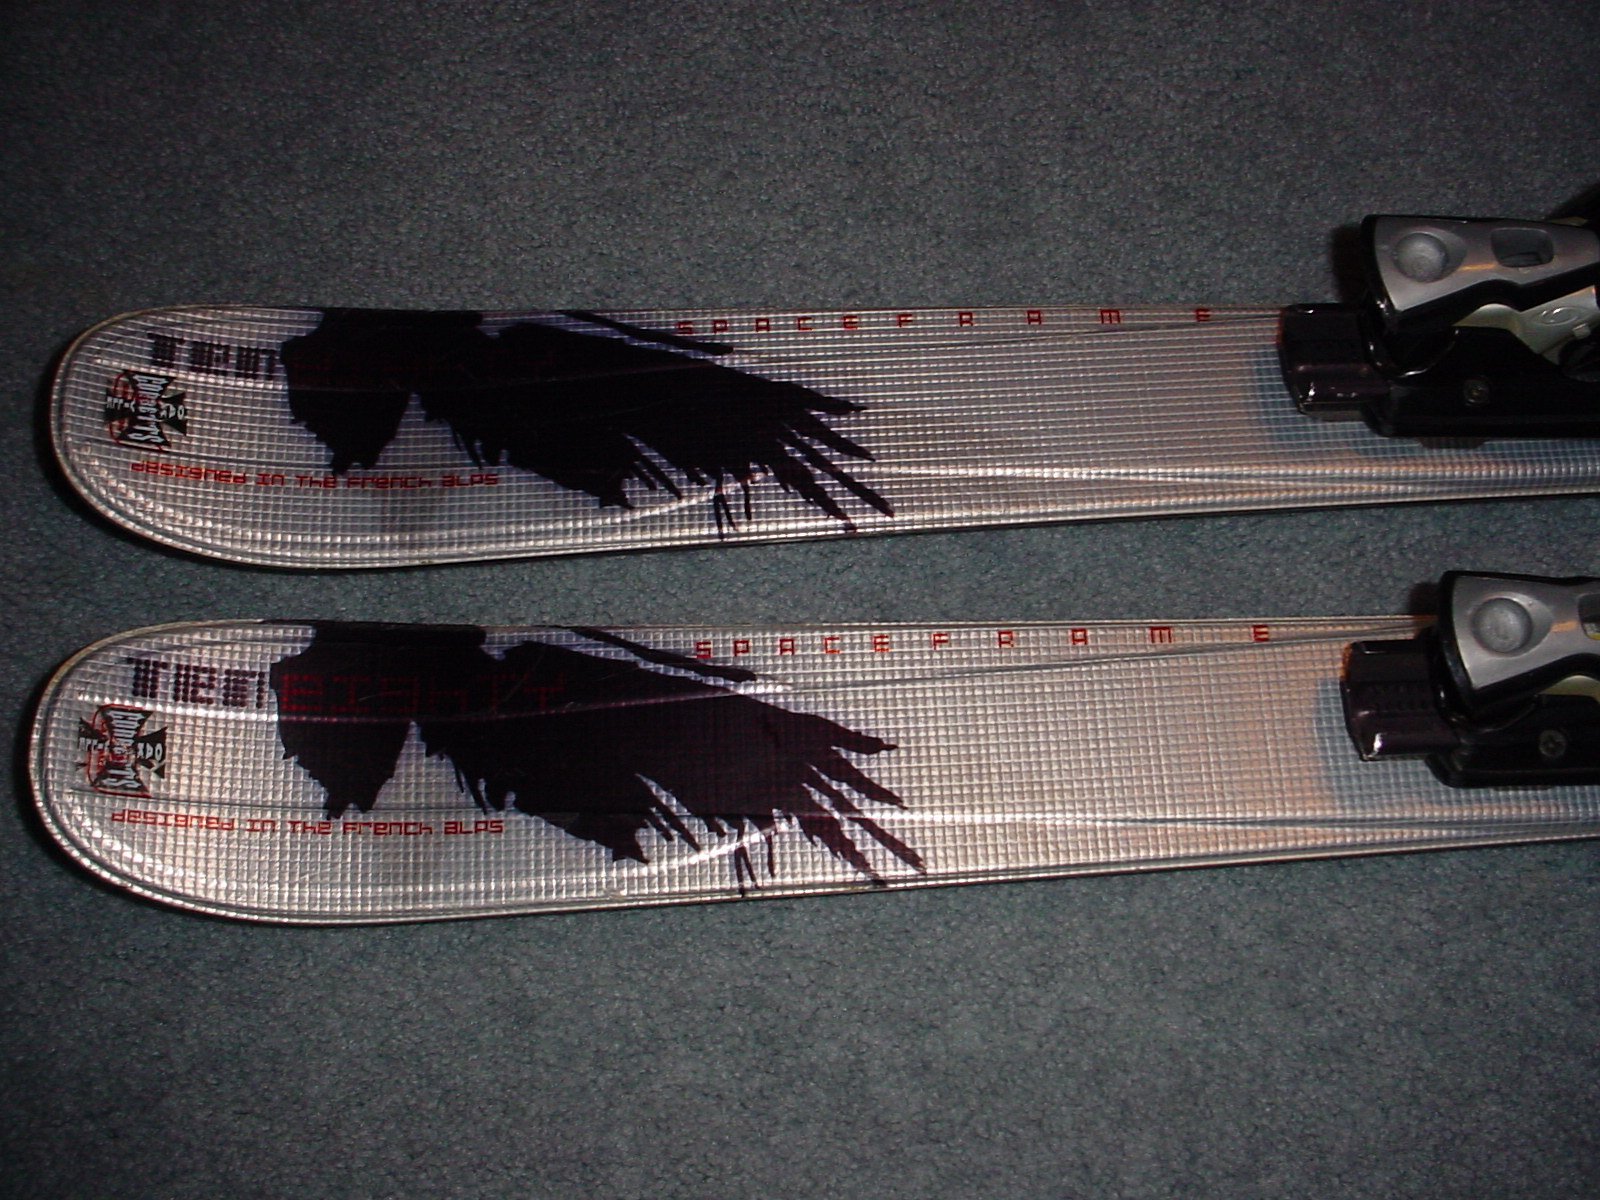 2005 Salomon 1080 tails